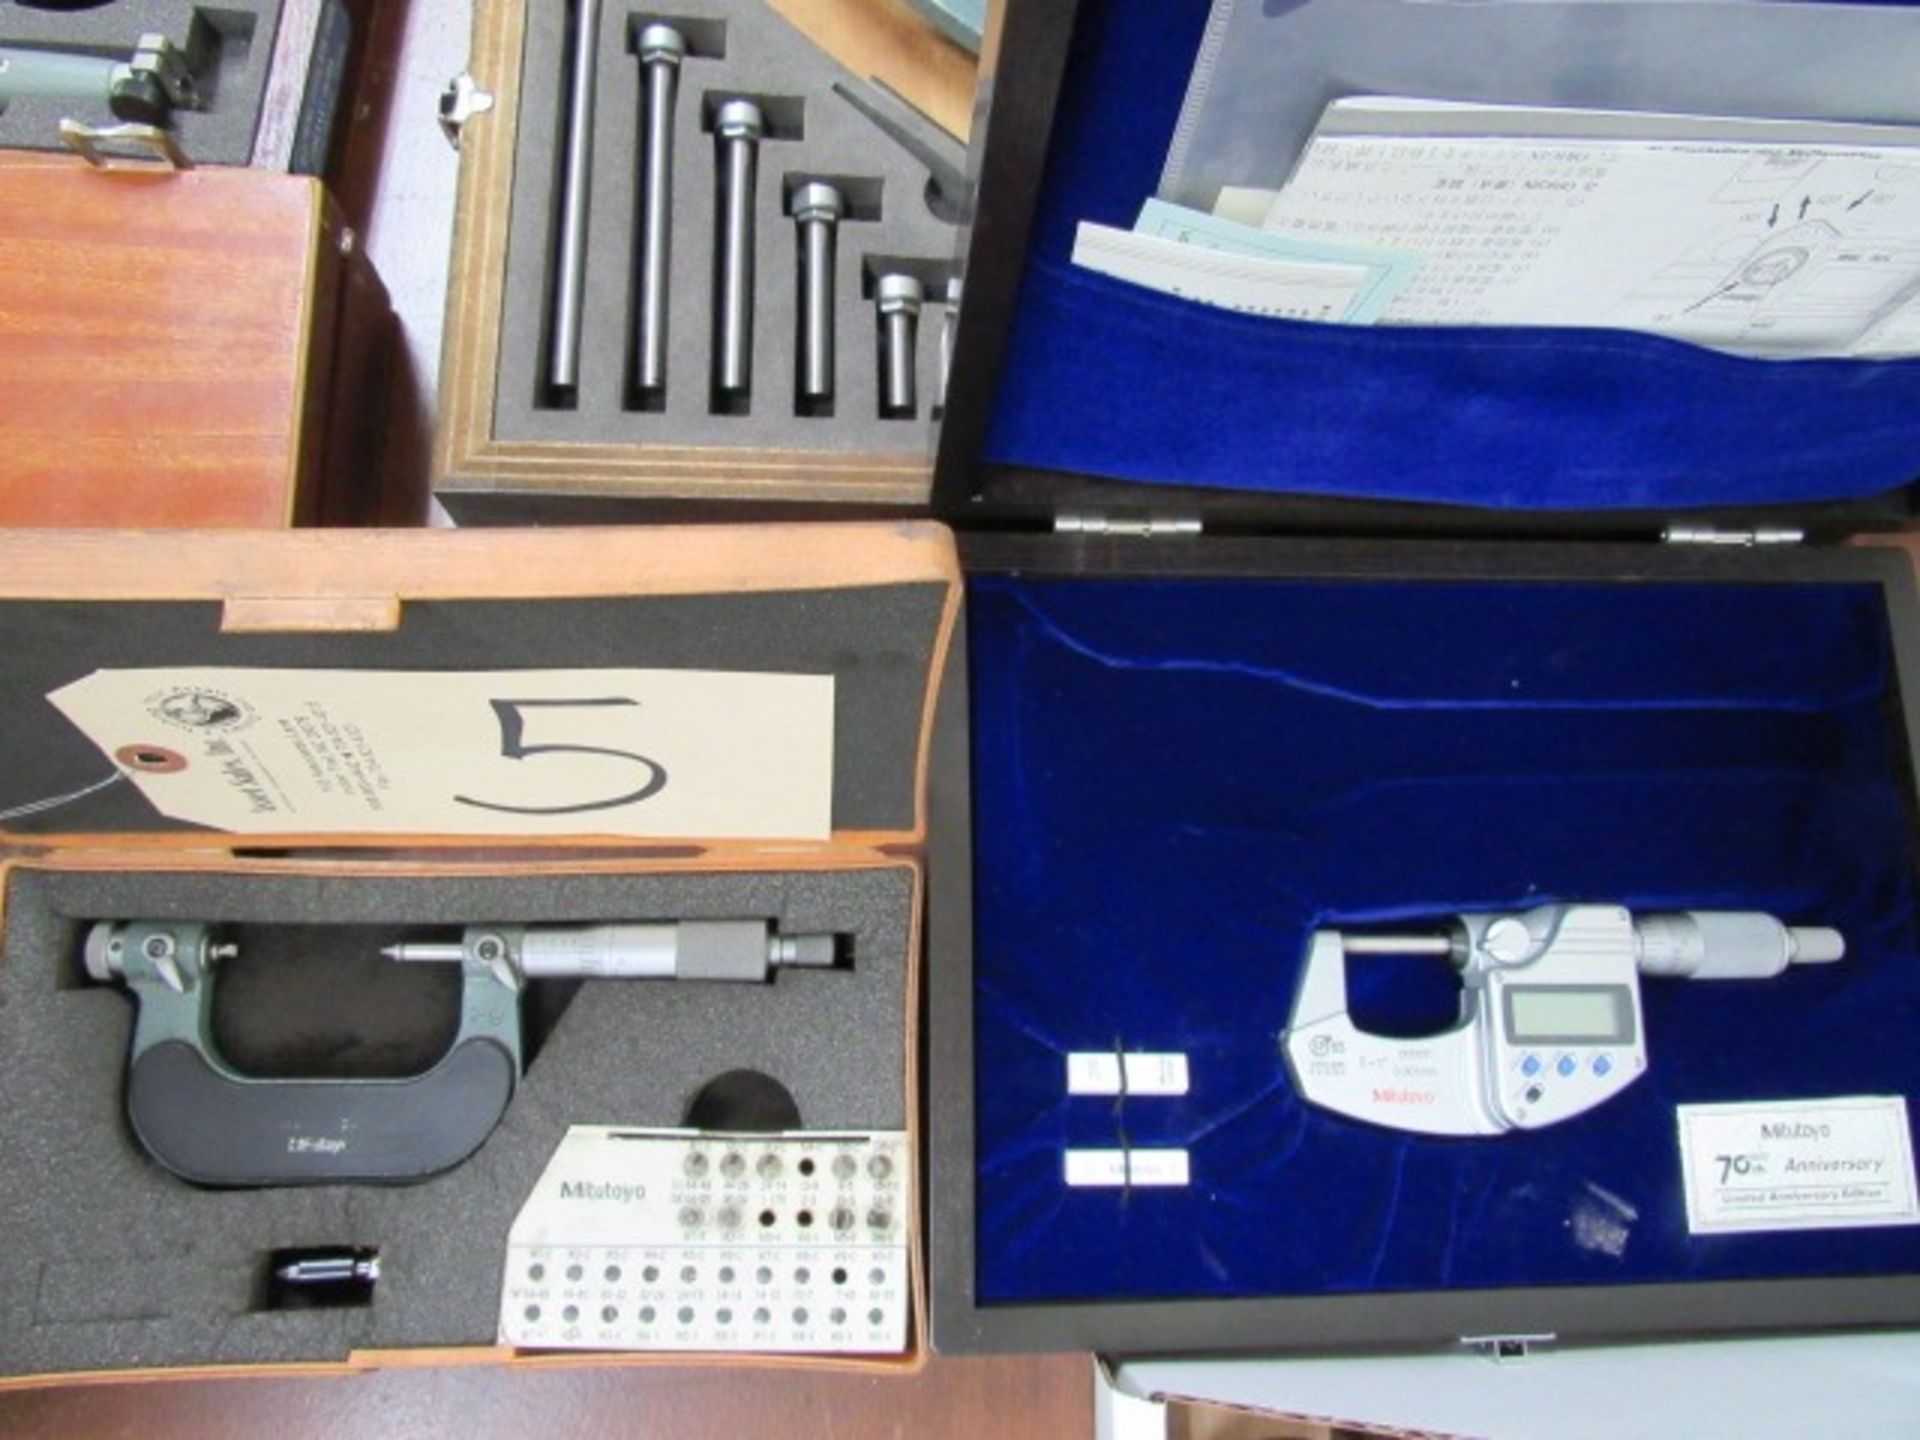 Mitutoyo 70th Anniversary 0''-1'' Digital Micrometer, Mitutoyo 1''-2'' Blade Micrometer